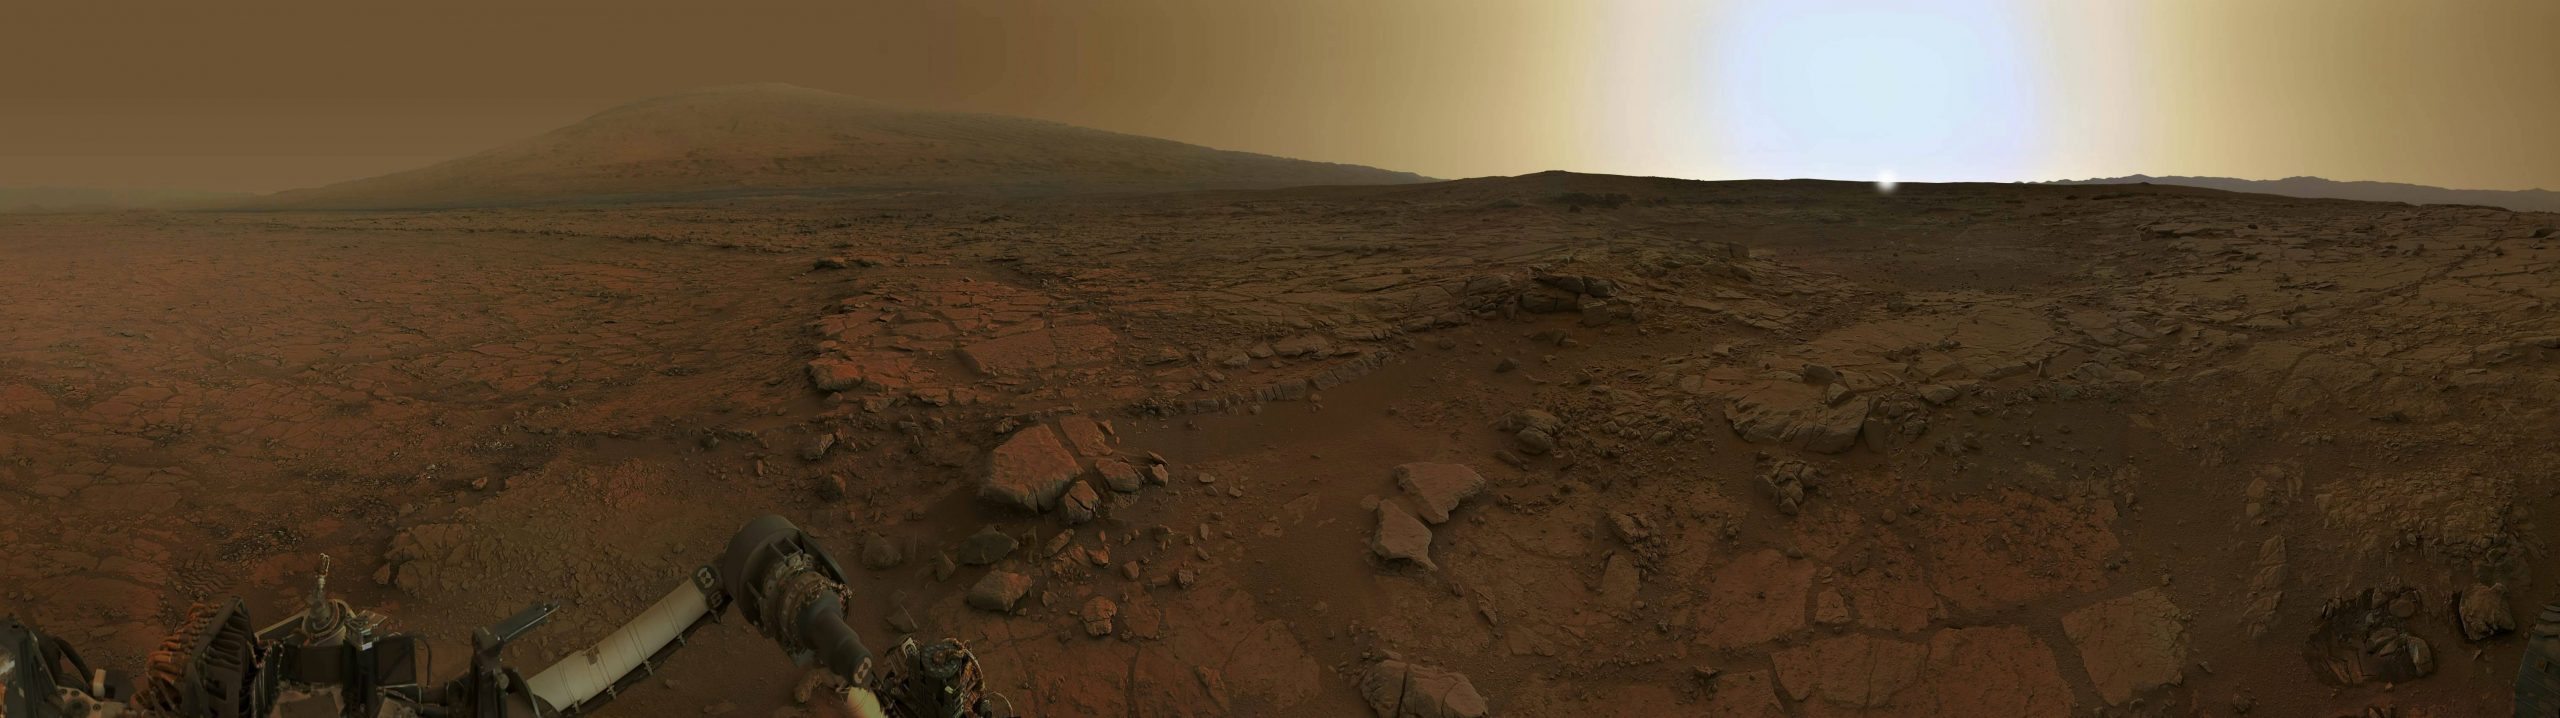 Un panorama de l'aube sur Mars